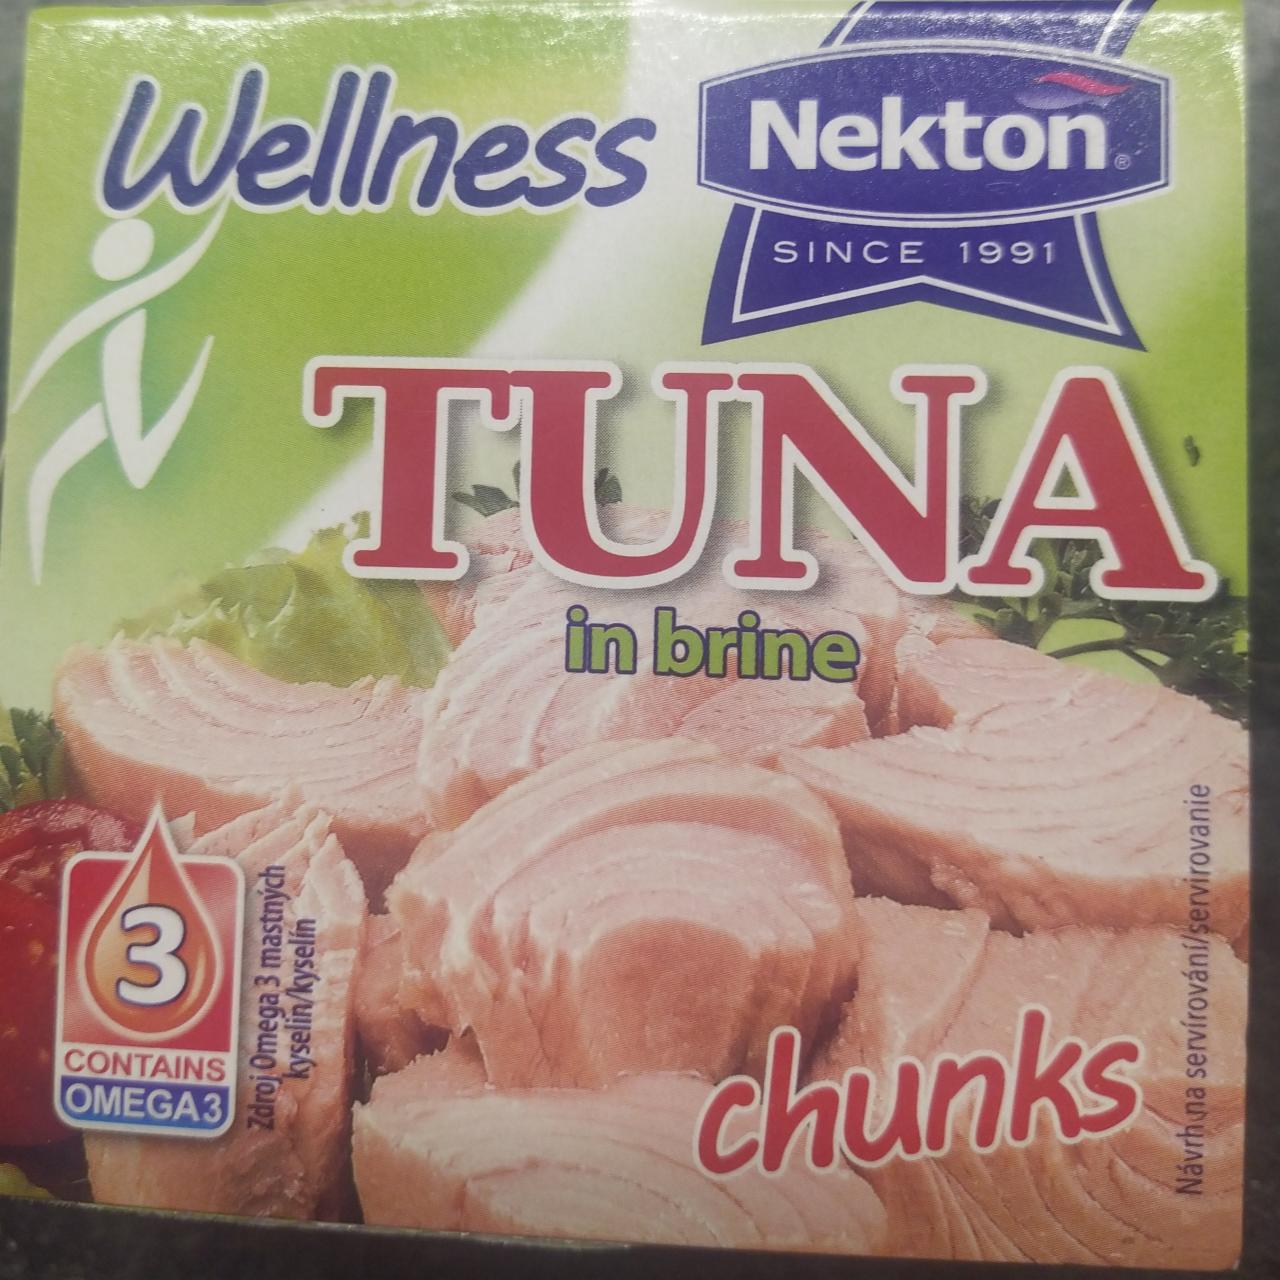 Fotografie - Wellness Tuna in brine Nekton